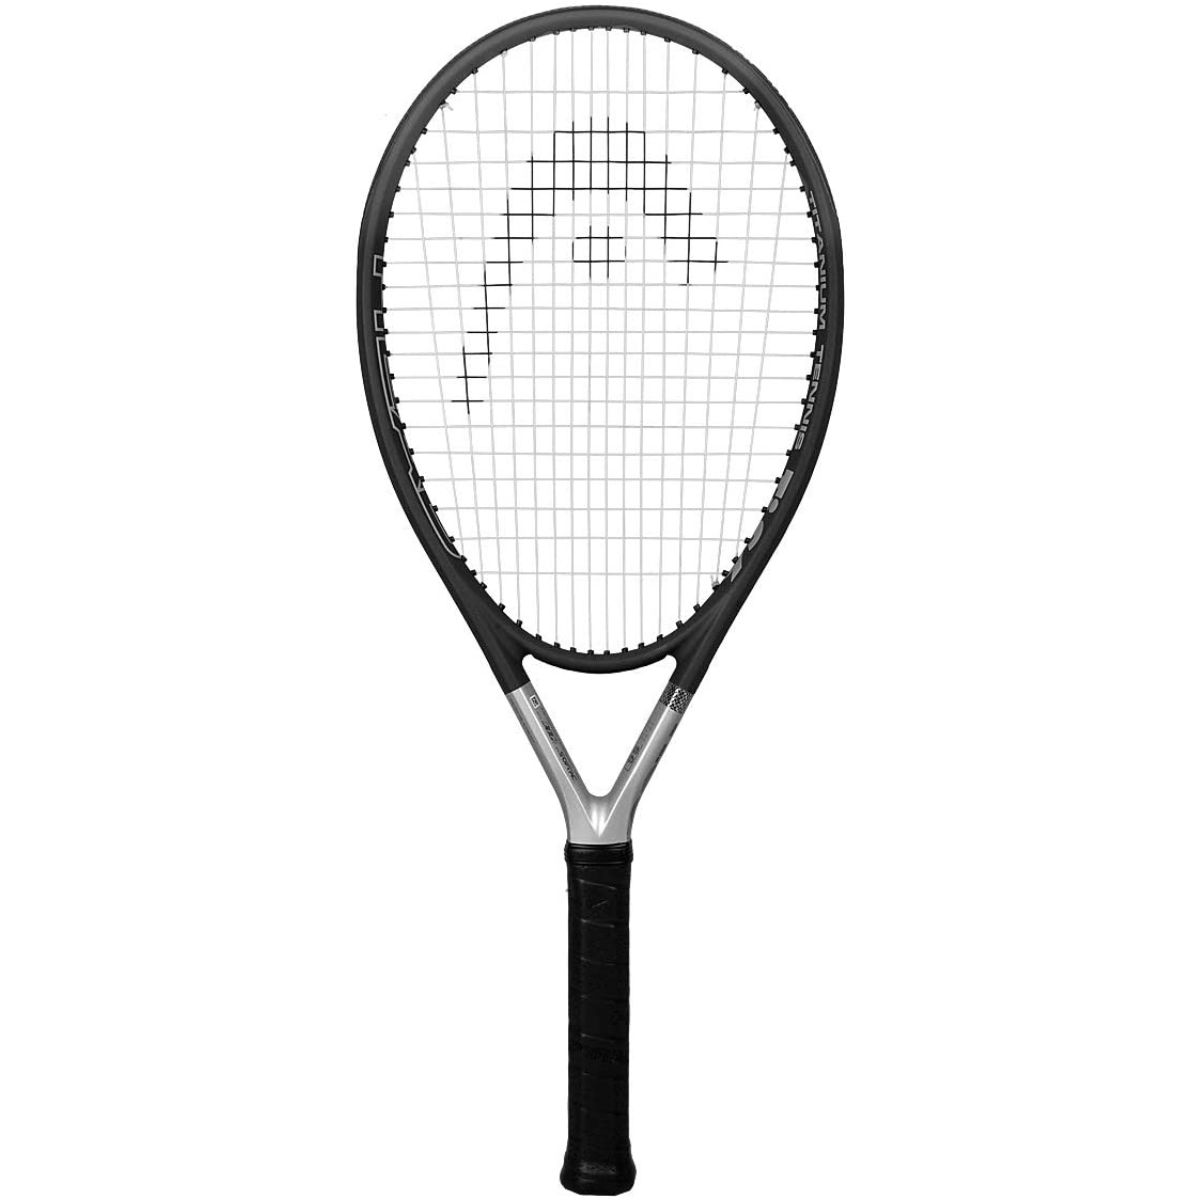 The Best Tennis Rackets Under $100 Options: HEAD Ti S6 Tennis Racket